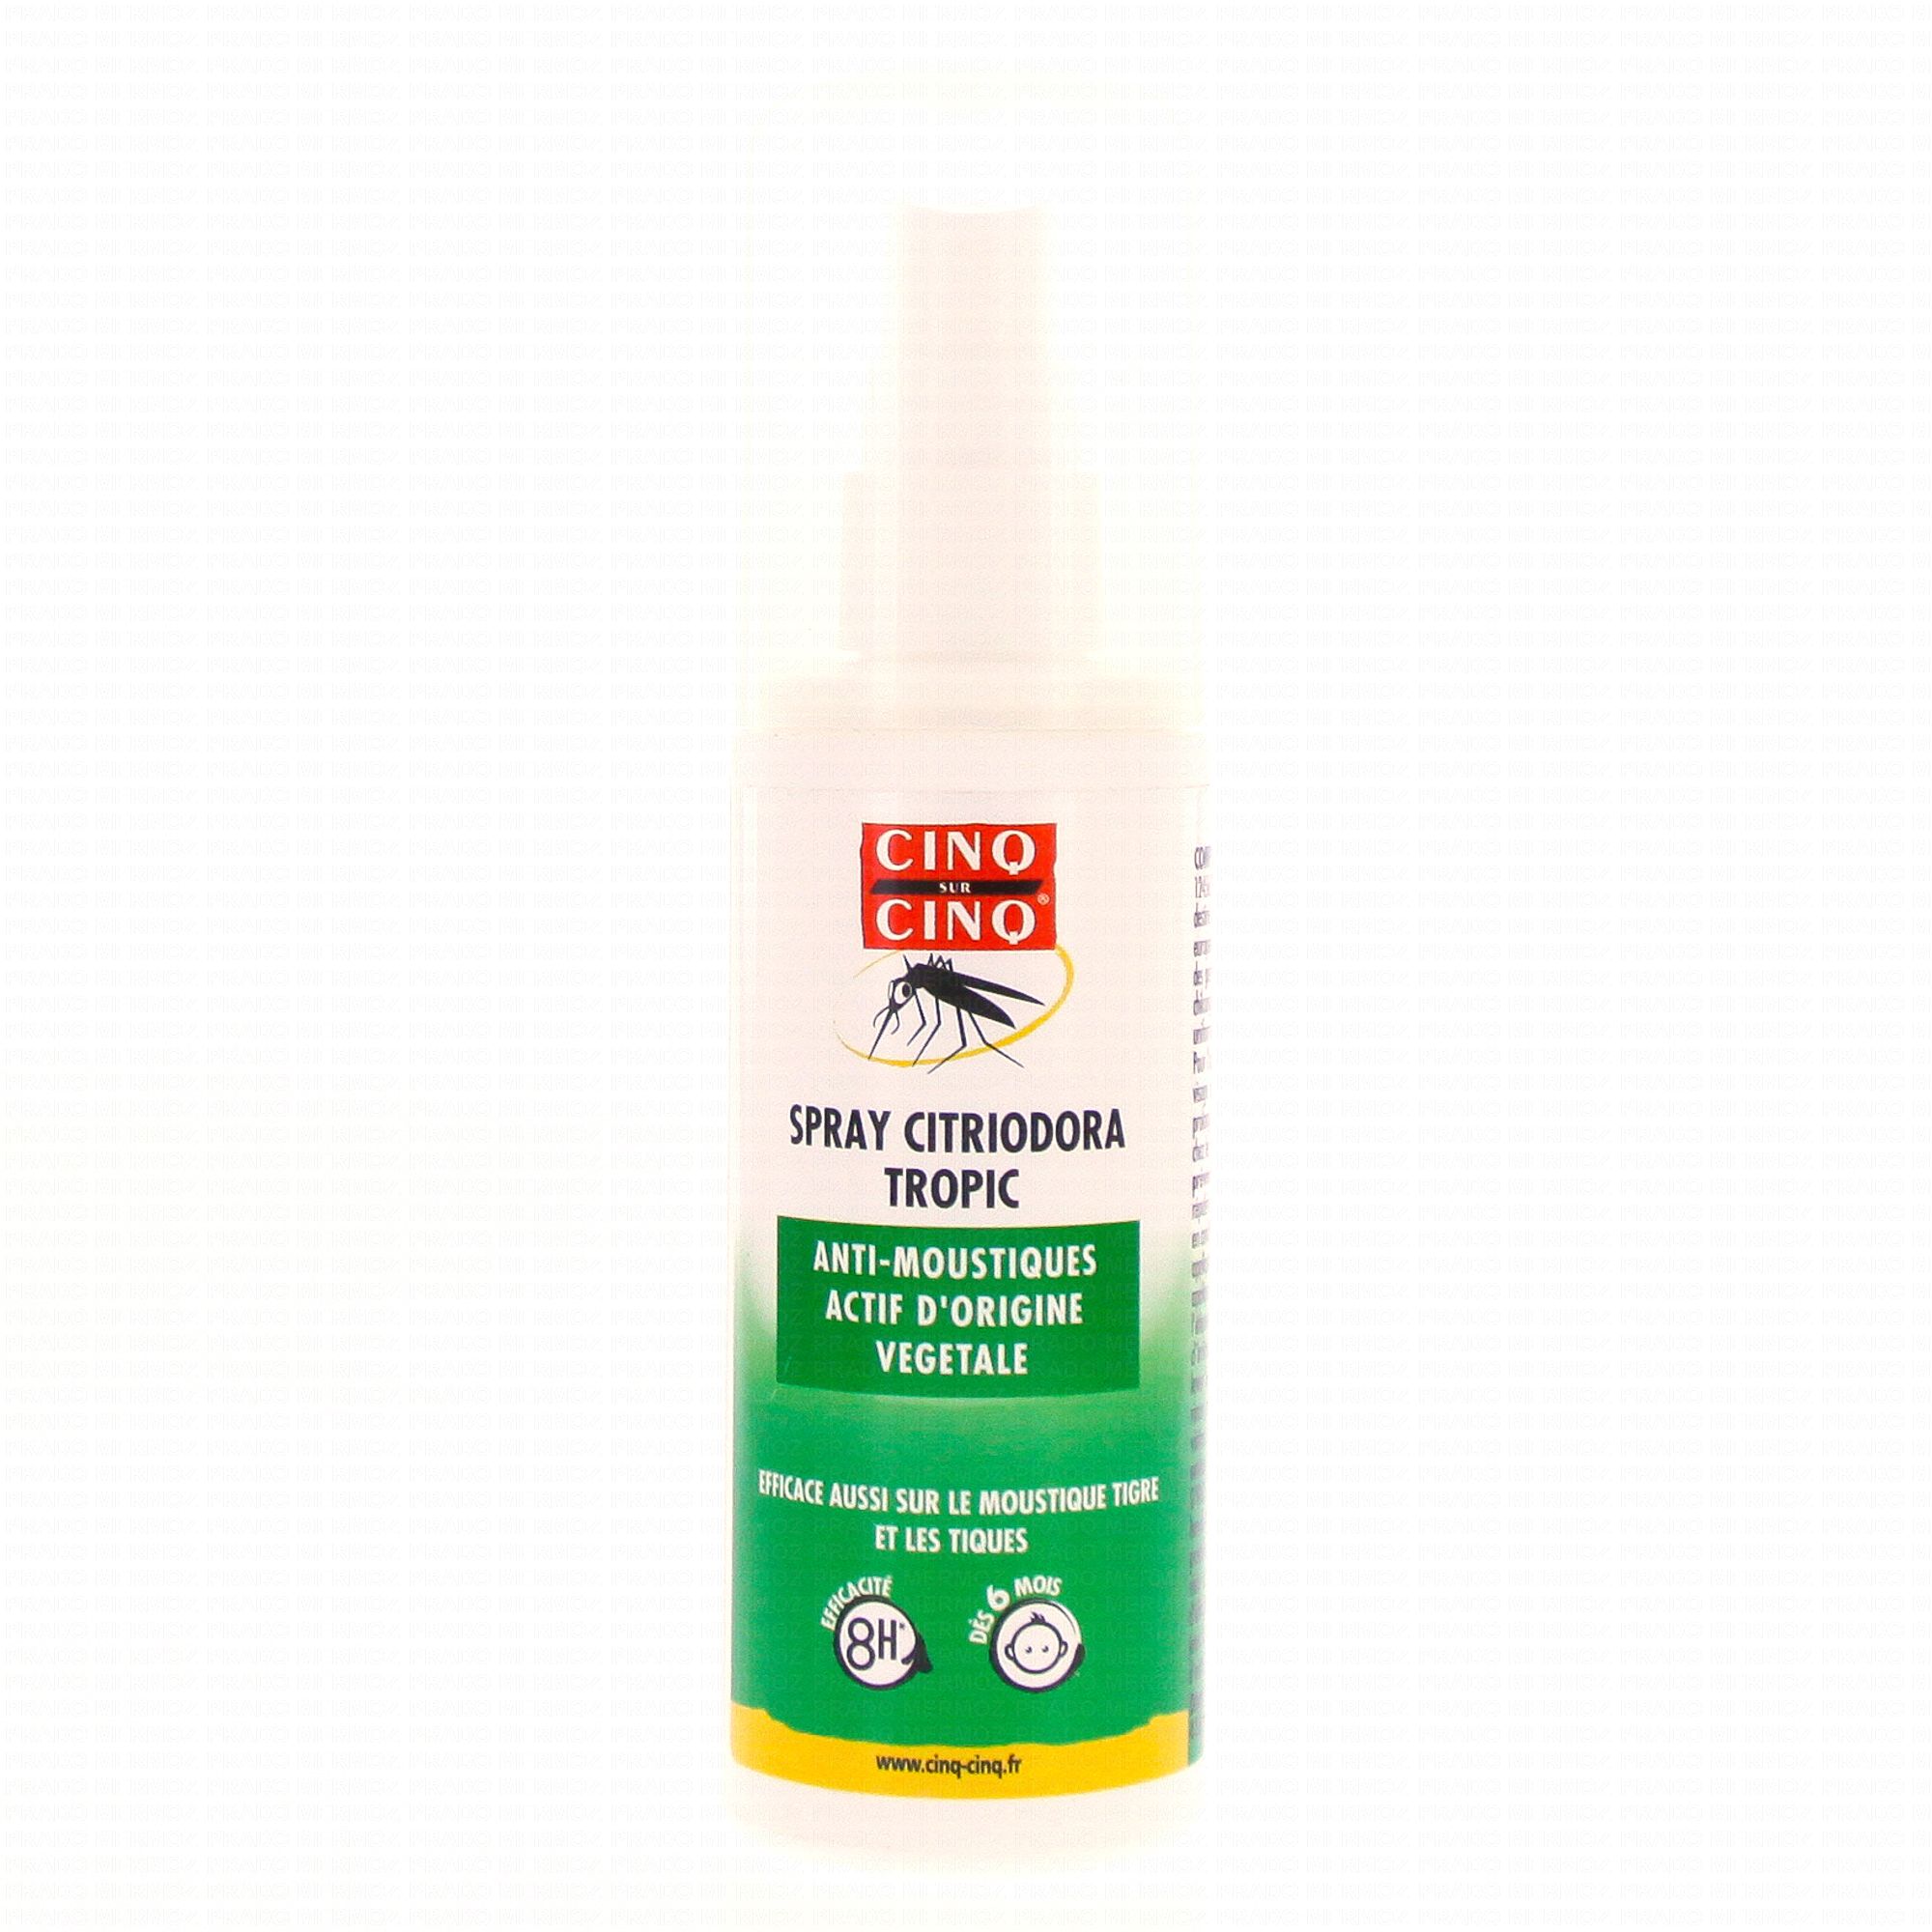 CINQ SUR CINQ anti-poux spray répulsif 100ml - Parapharmacie Prado Mermoz